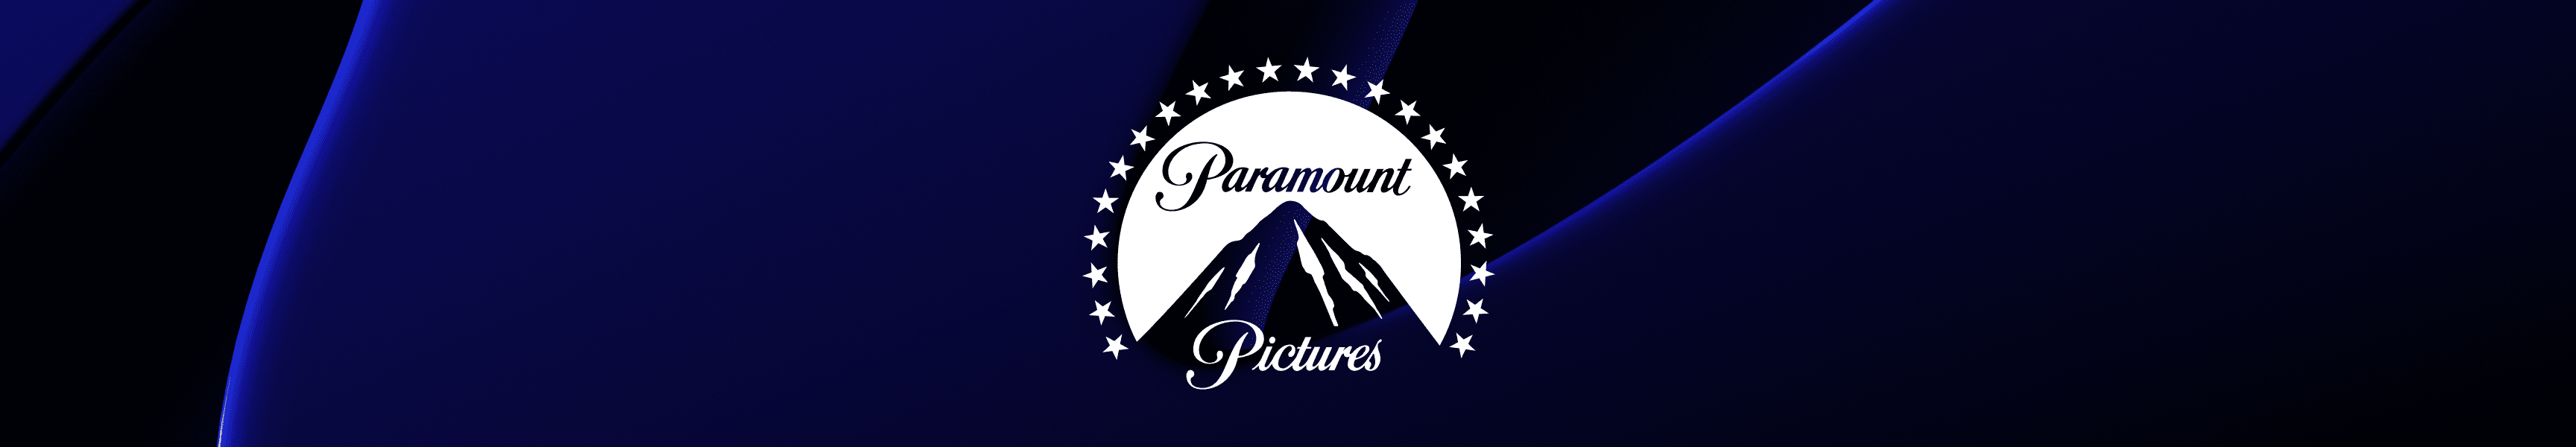 Paramount Pictures Gorras